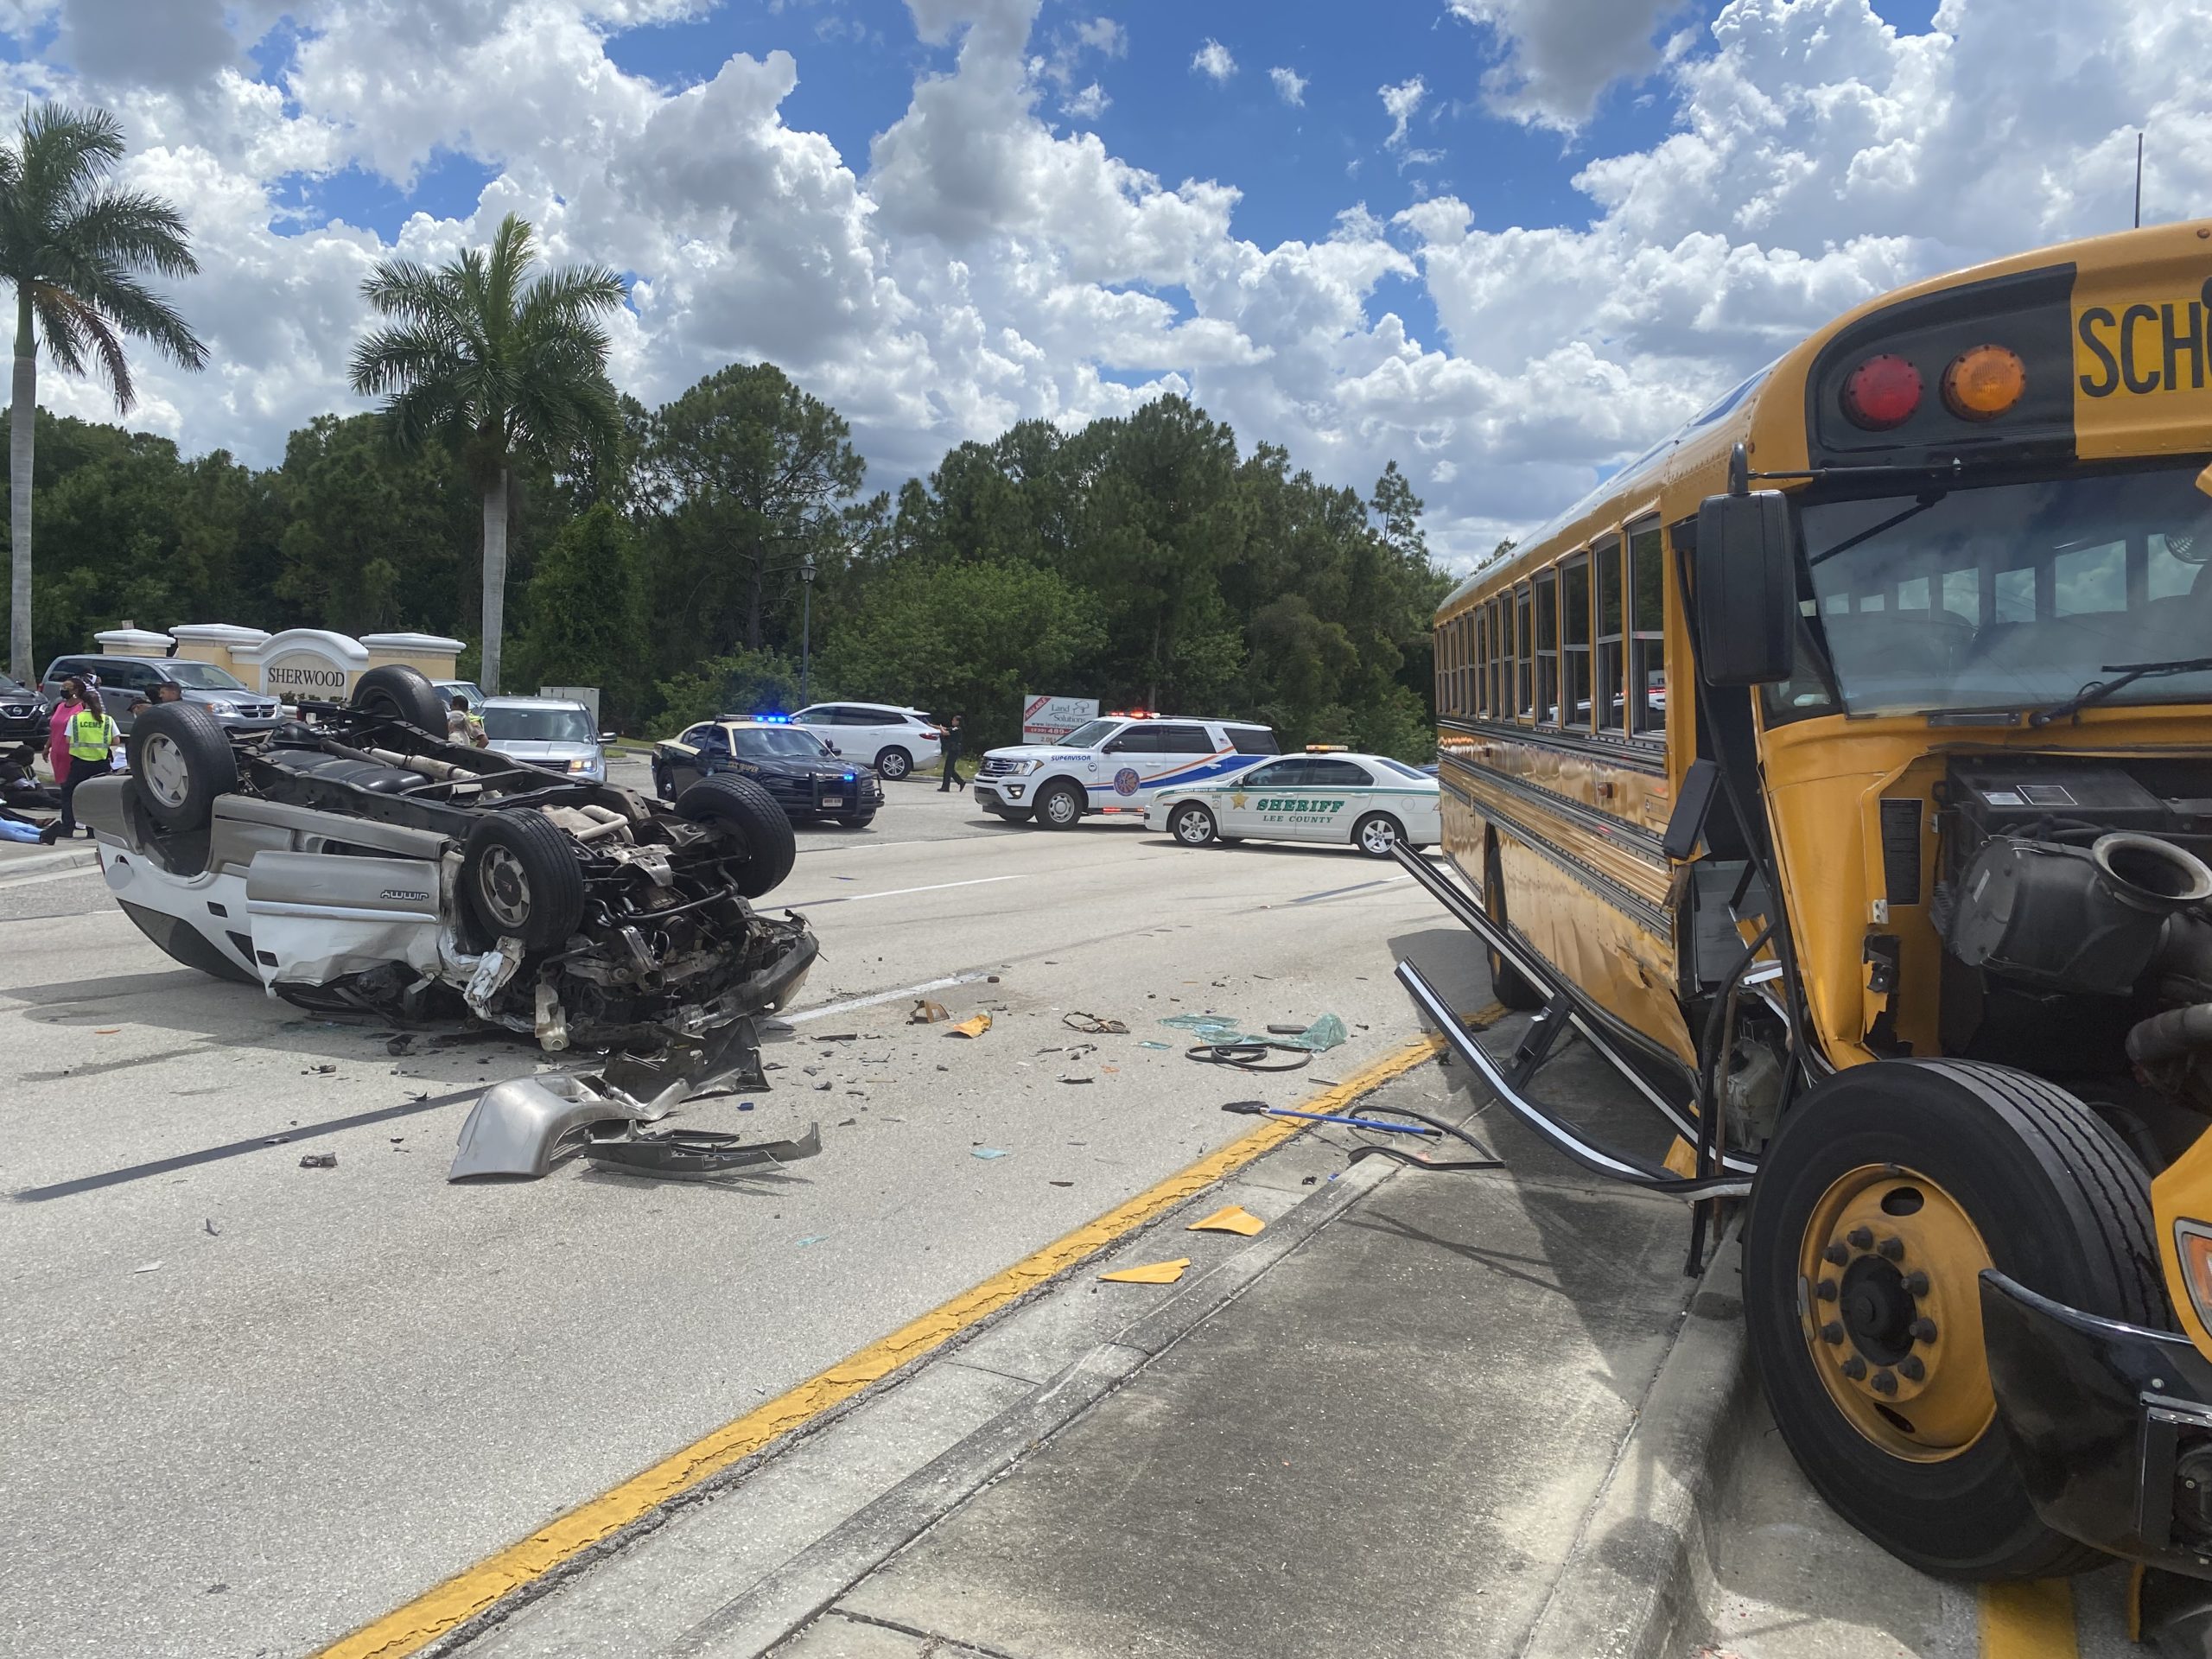 2 injured in crash involving Lee County school bus, SUV